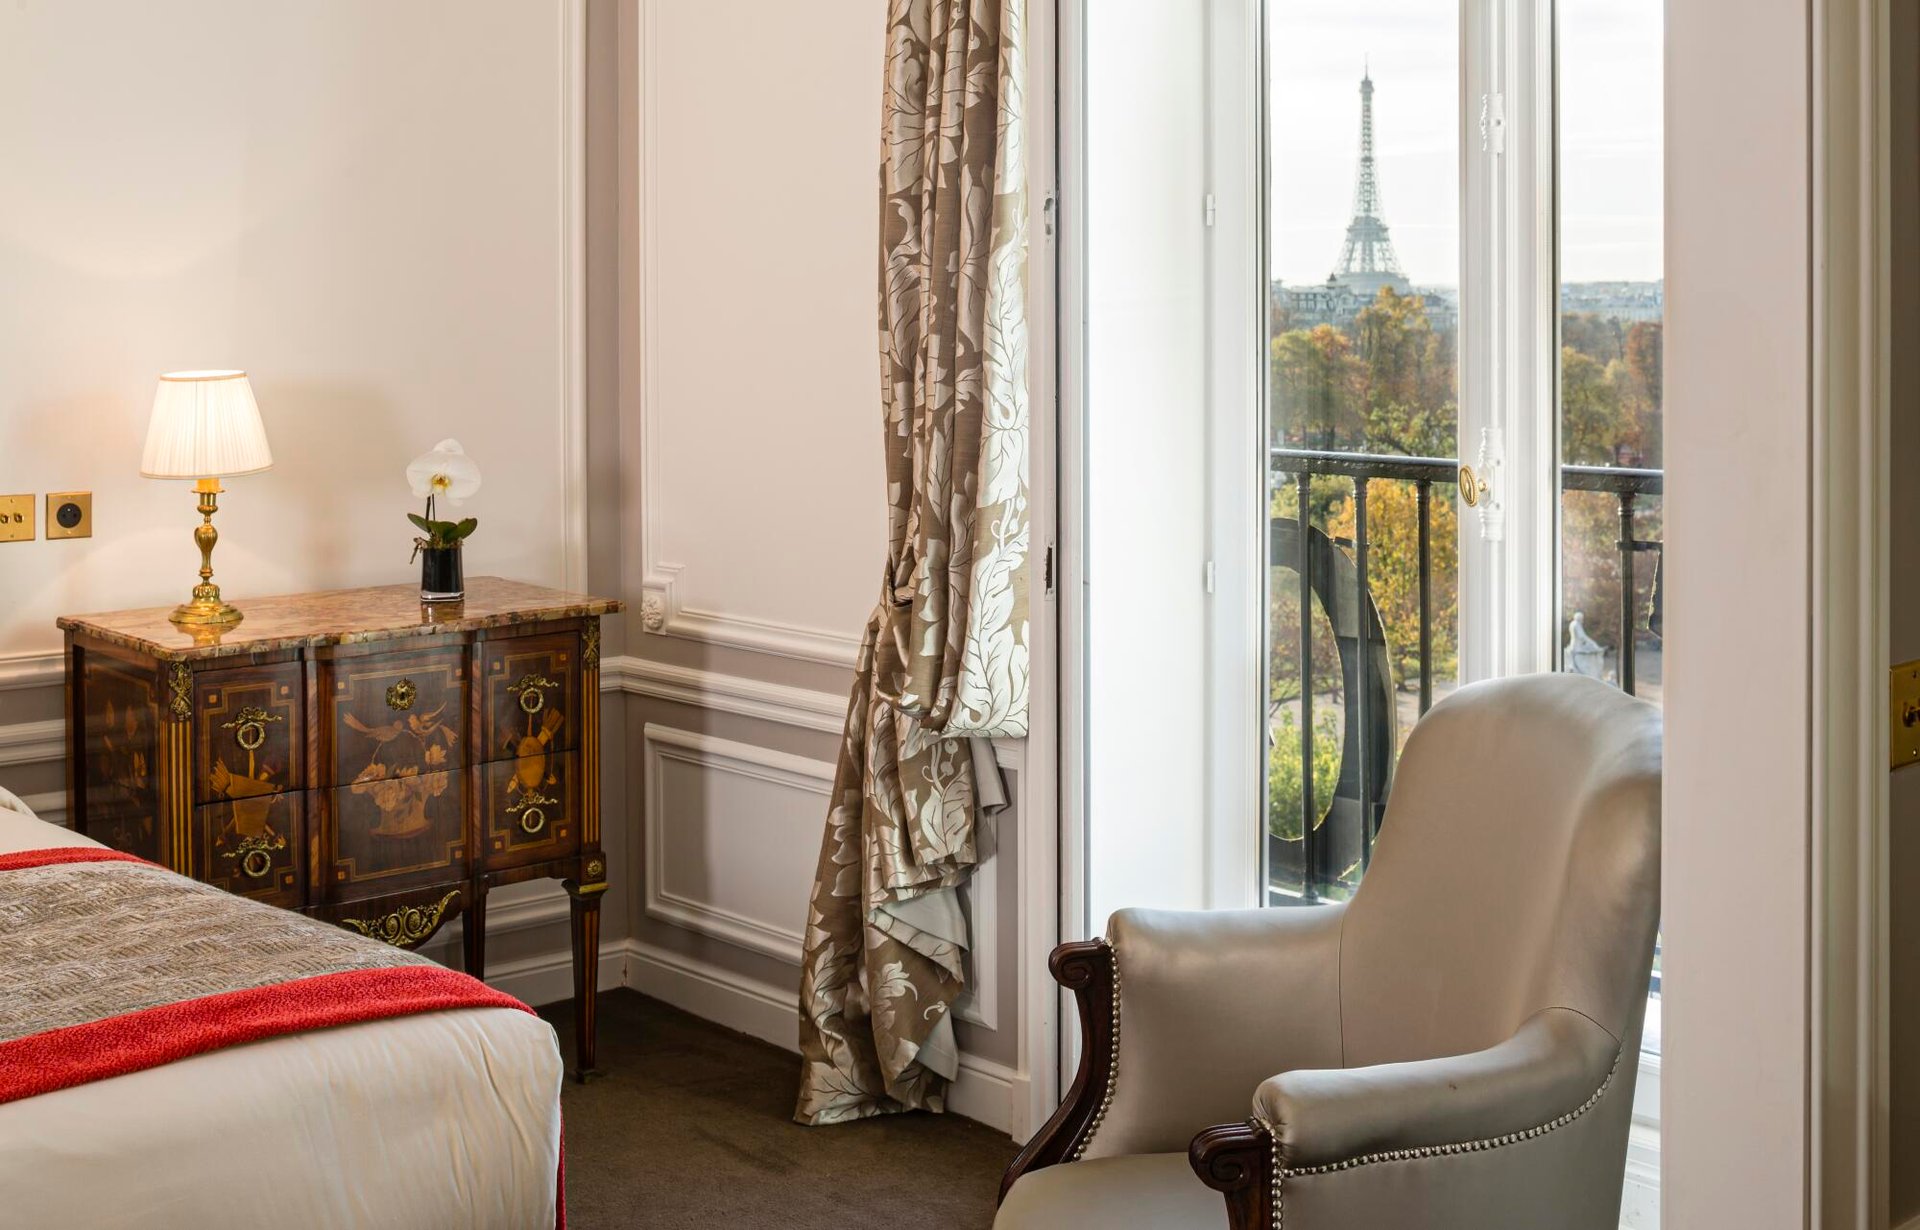 Hotel Regina Louvre Eiffel tower suite